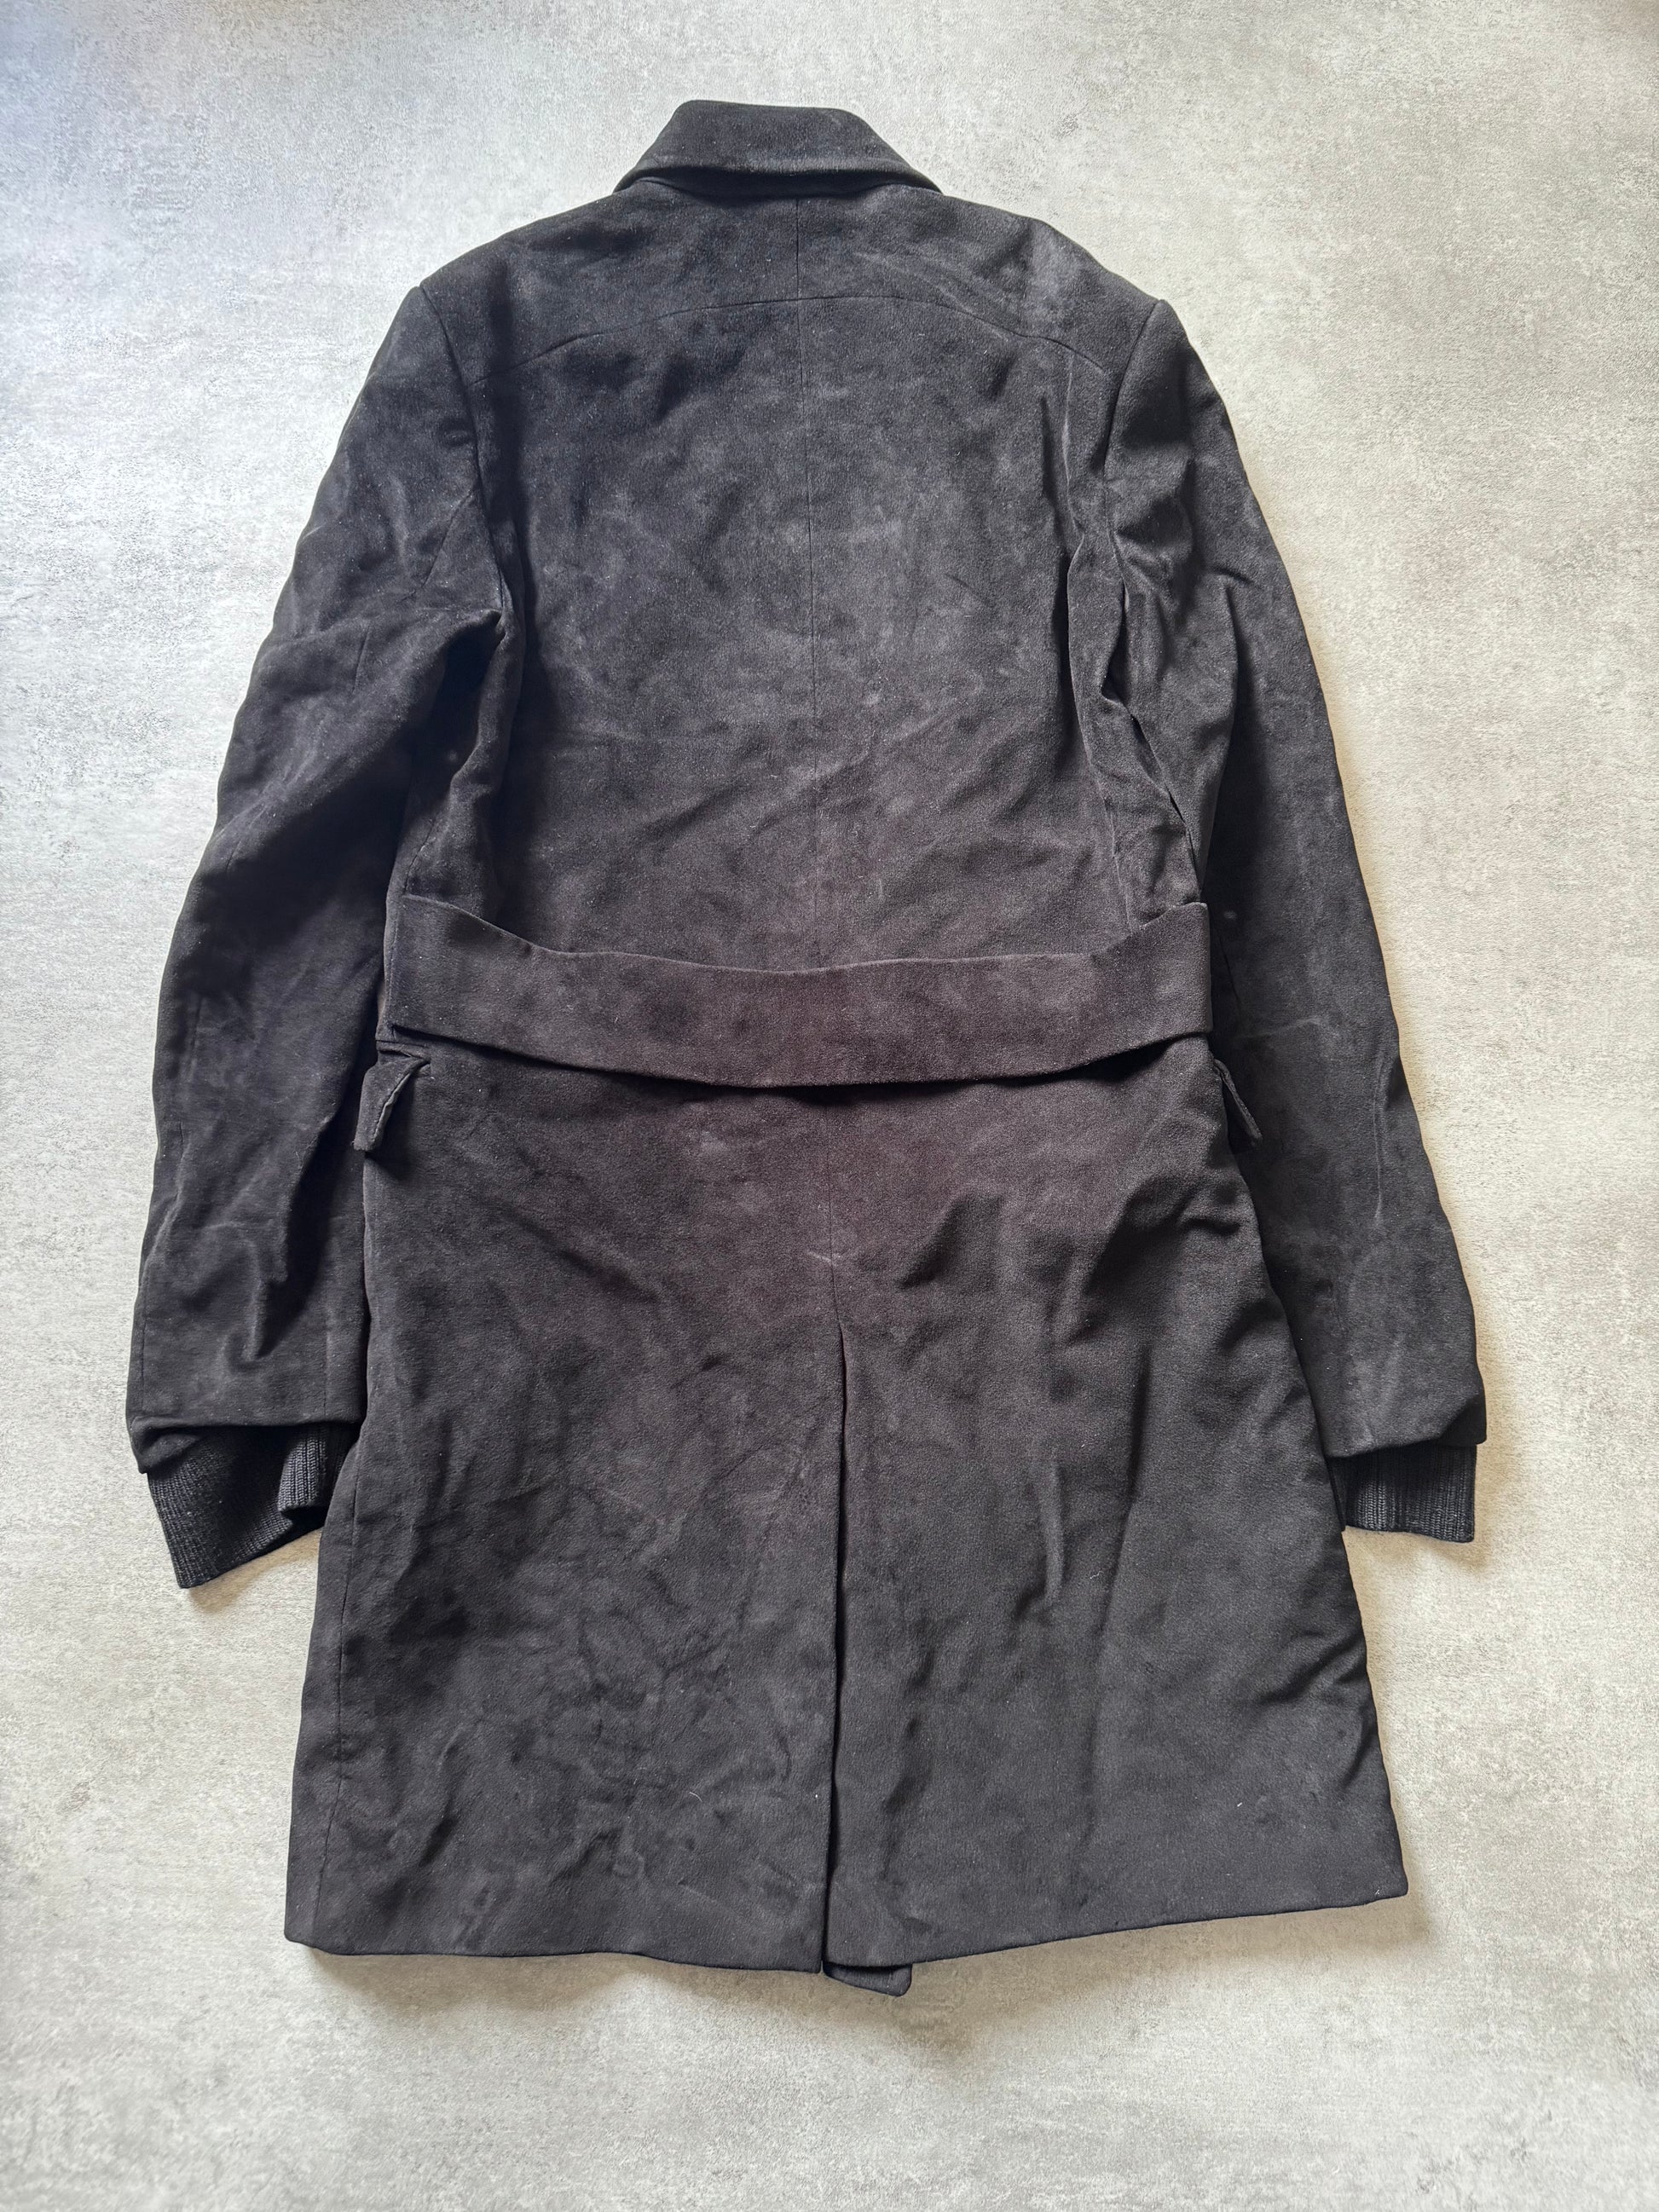 Givenchy Asymmetrical Black Contemporary Coat (M) - 2